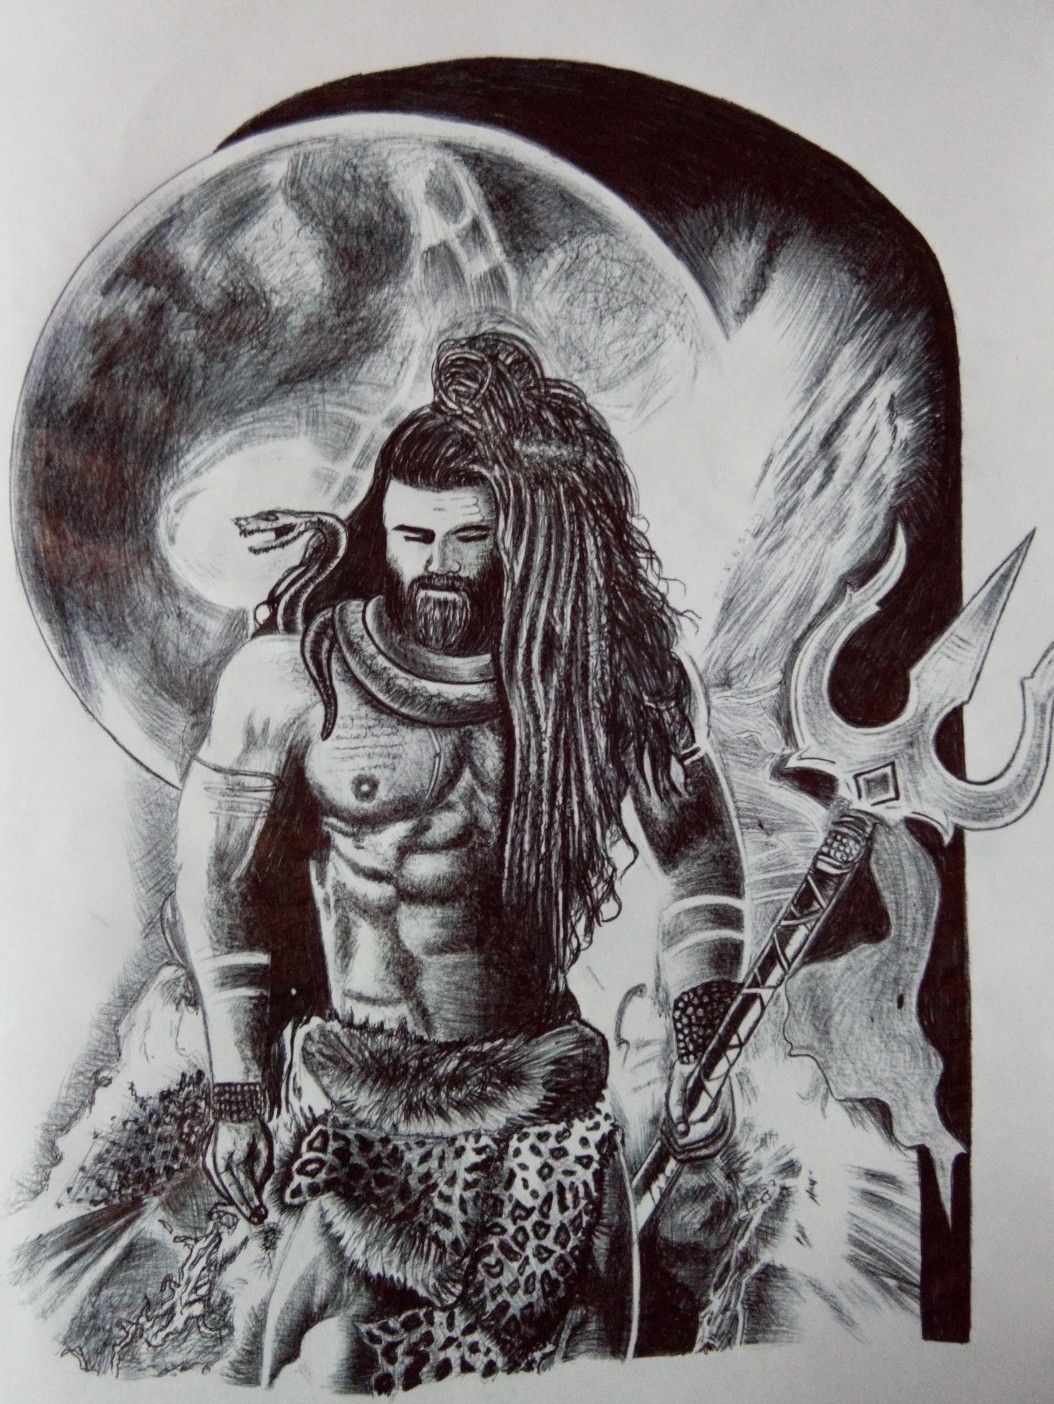 Buy Shiva Pencil Art Online In India - Etsy India